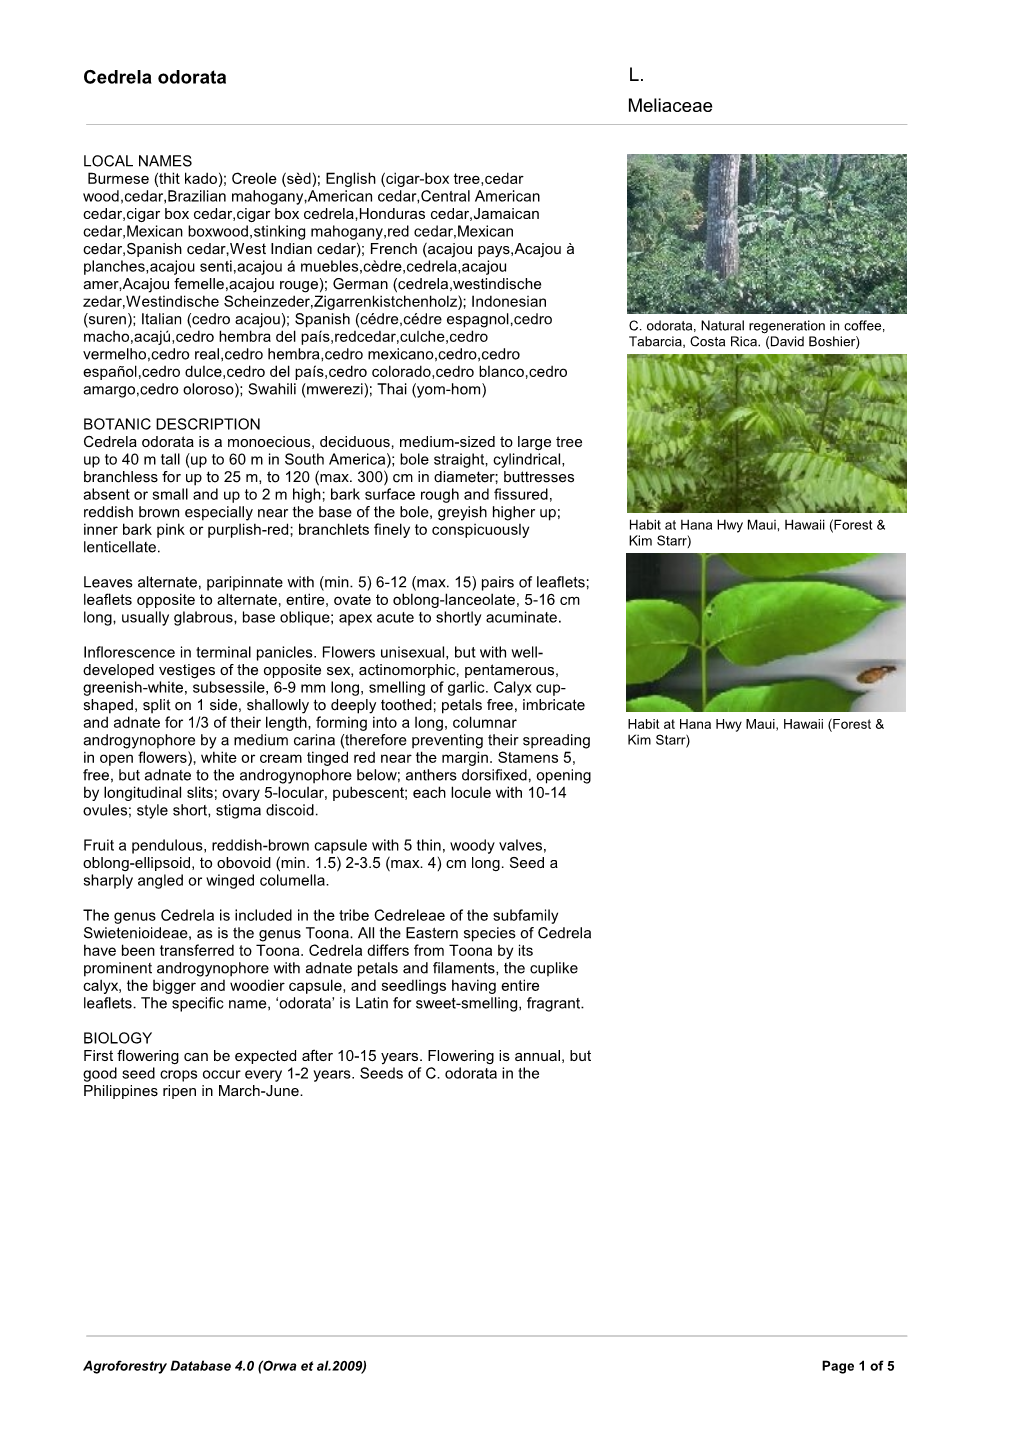 Cedrela Odorata Meliaceae L